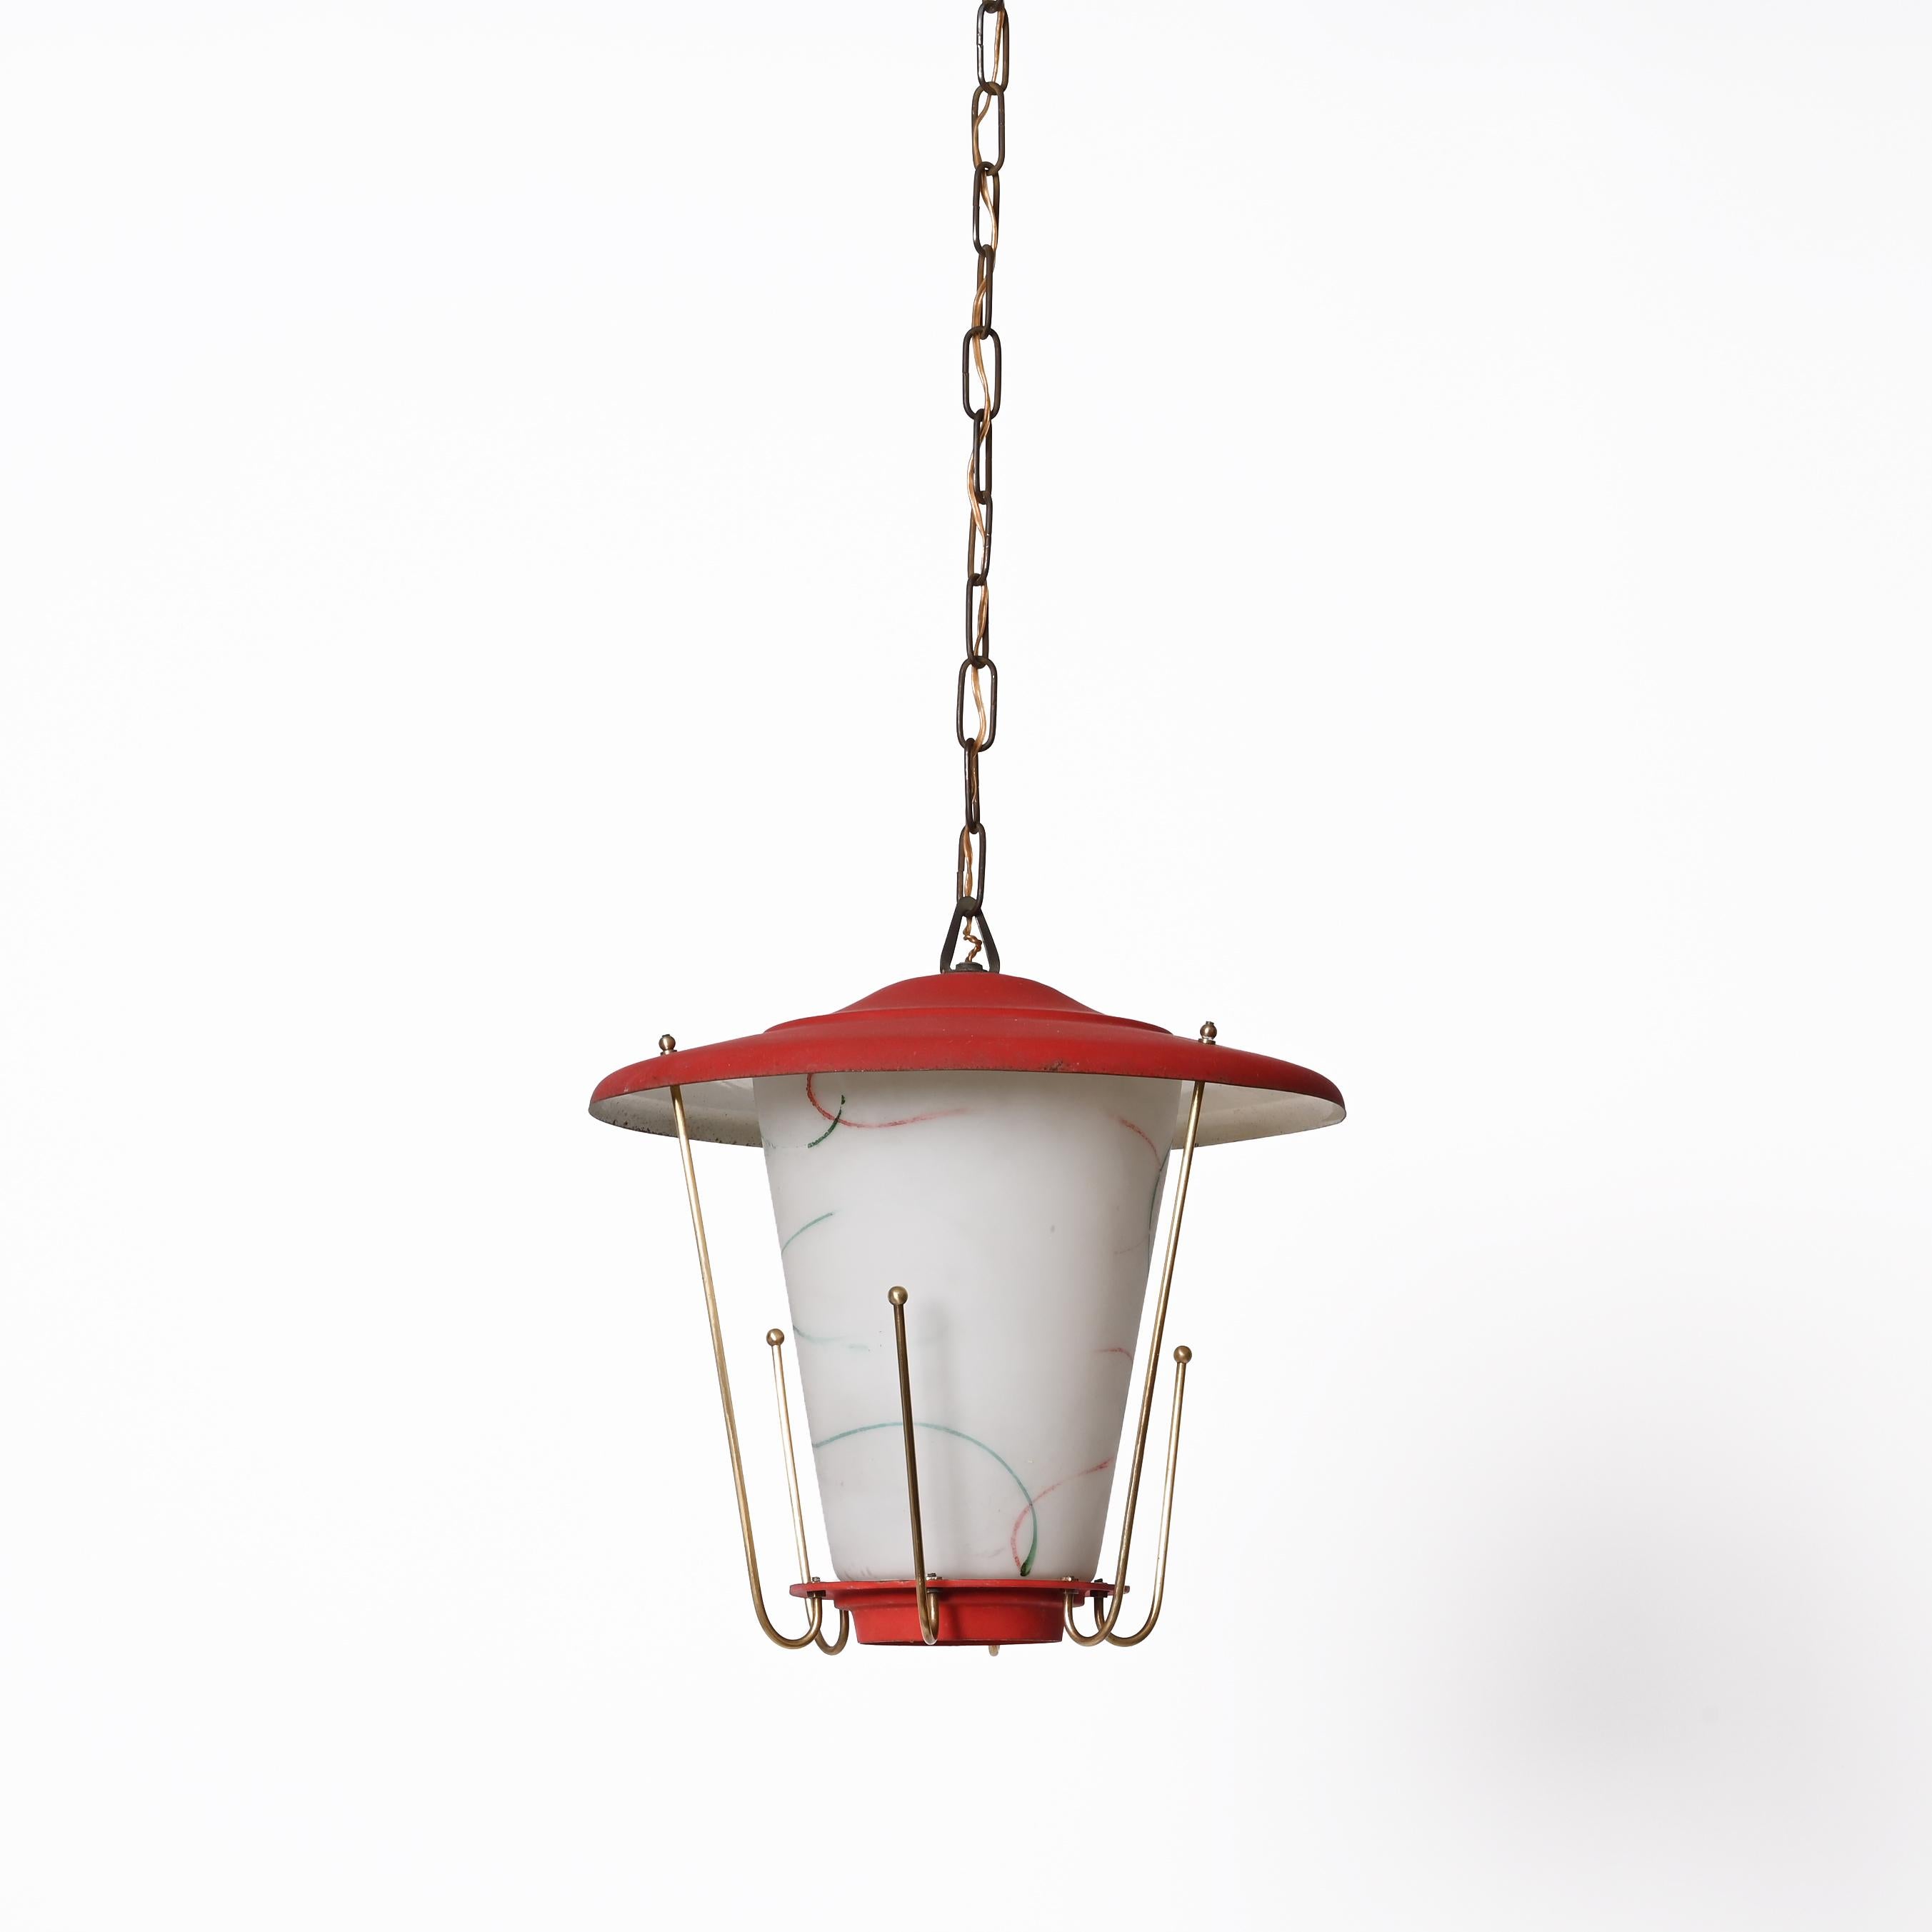 Midcentury Round Opaline Glass and Brass Italian Red Lantern Chandelier, 1950s For Sale 6